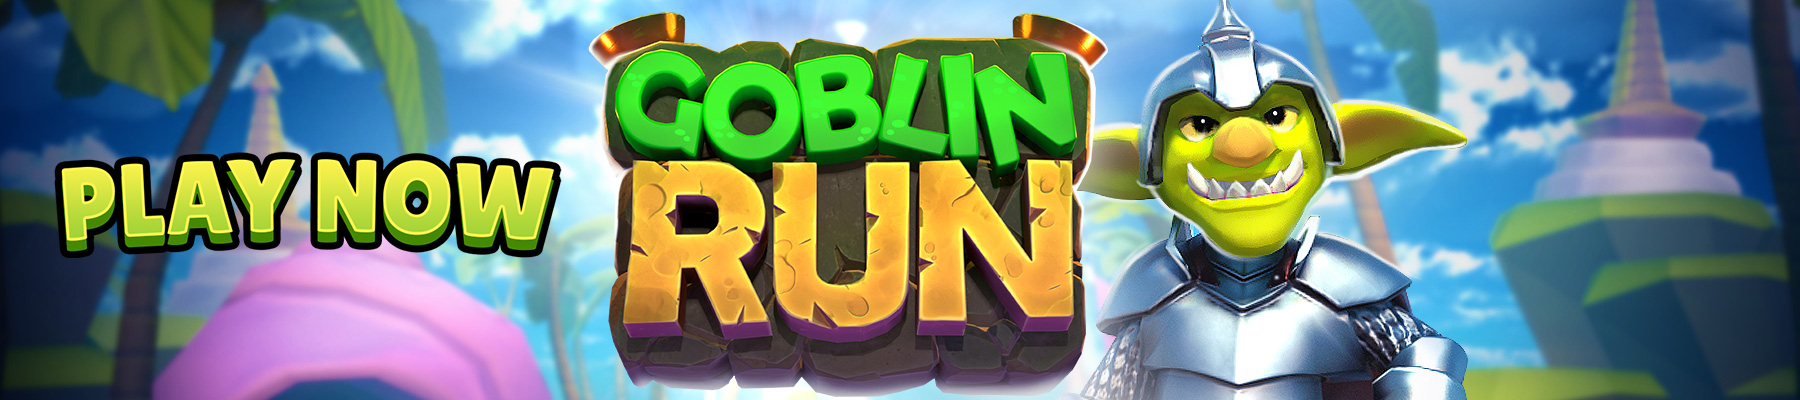 Jouer Goblin Run maintenant